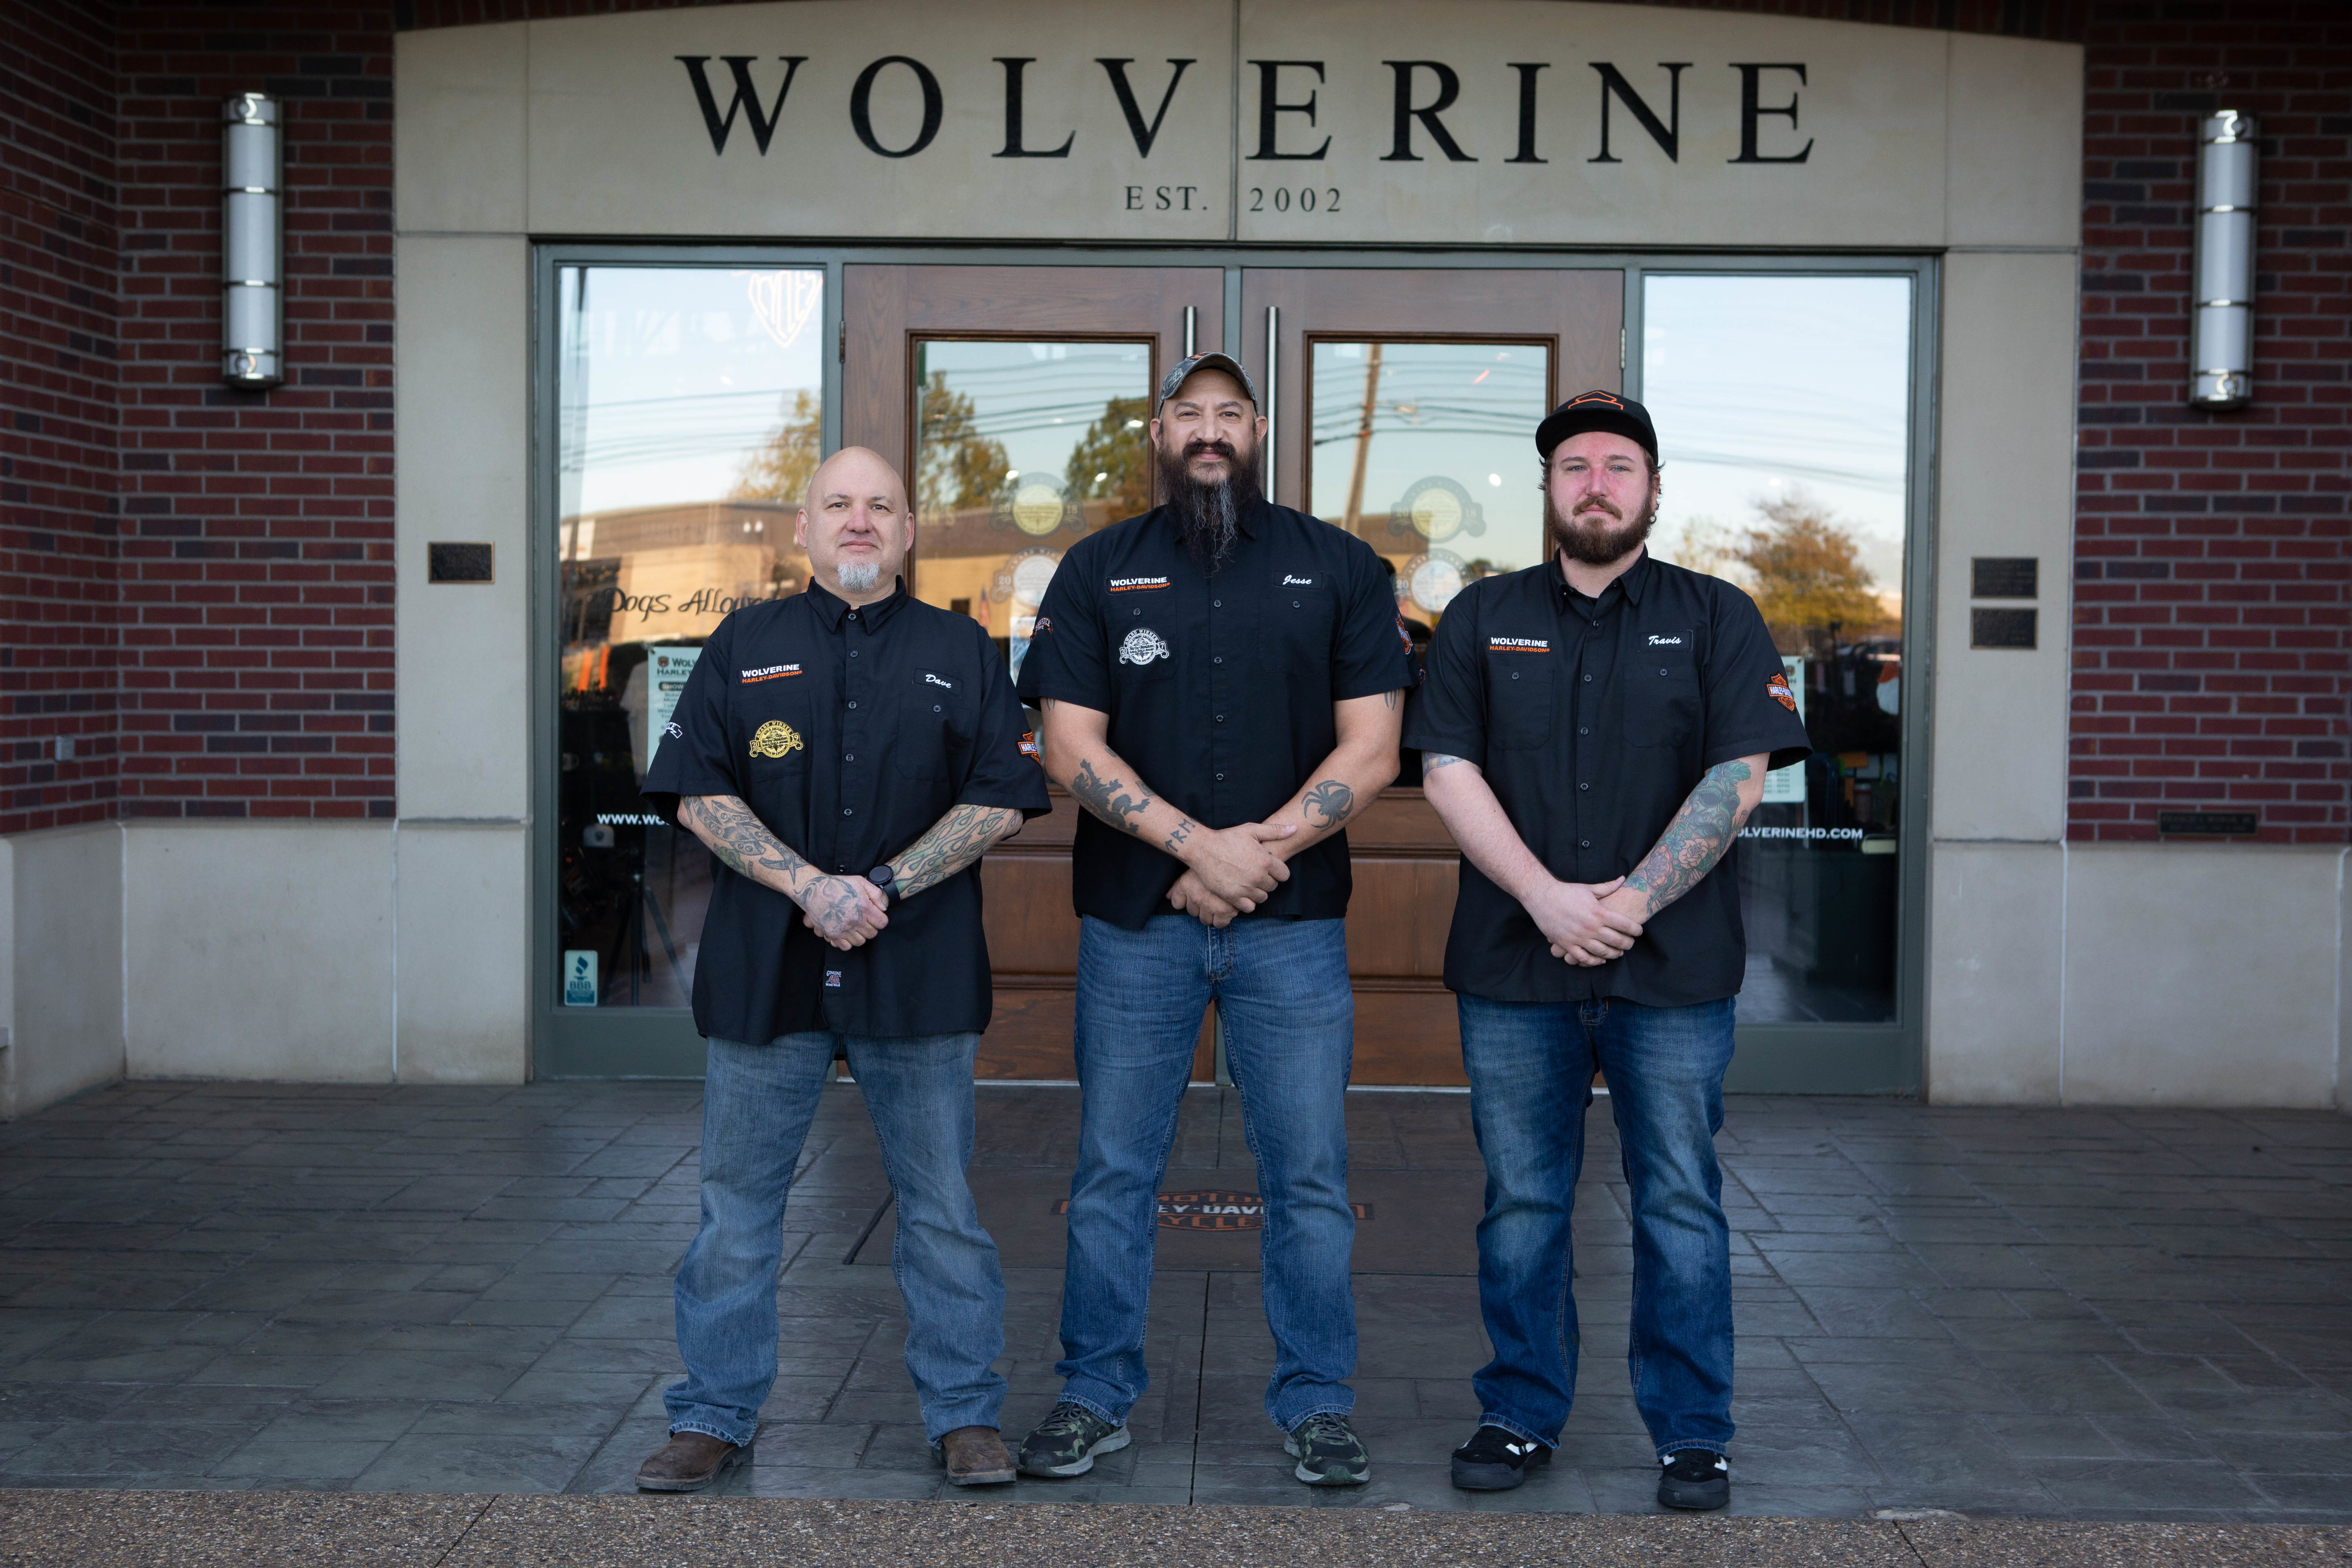 Service Department at Wolverine Harley-Davidson